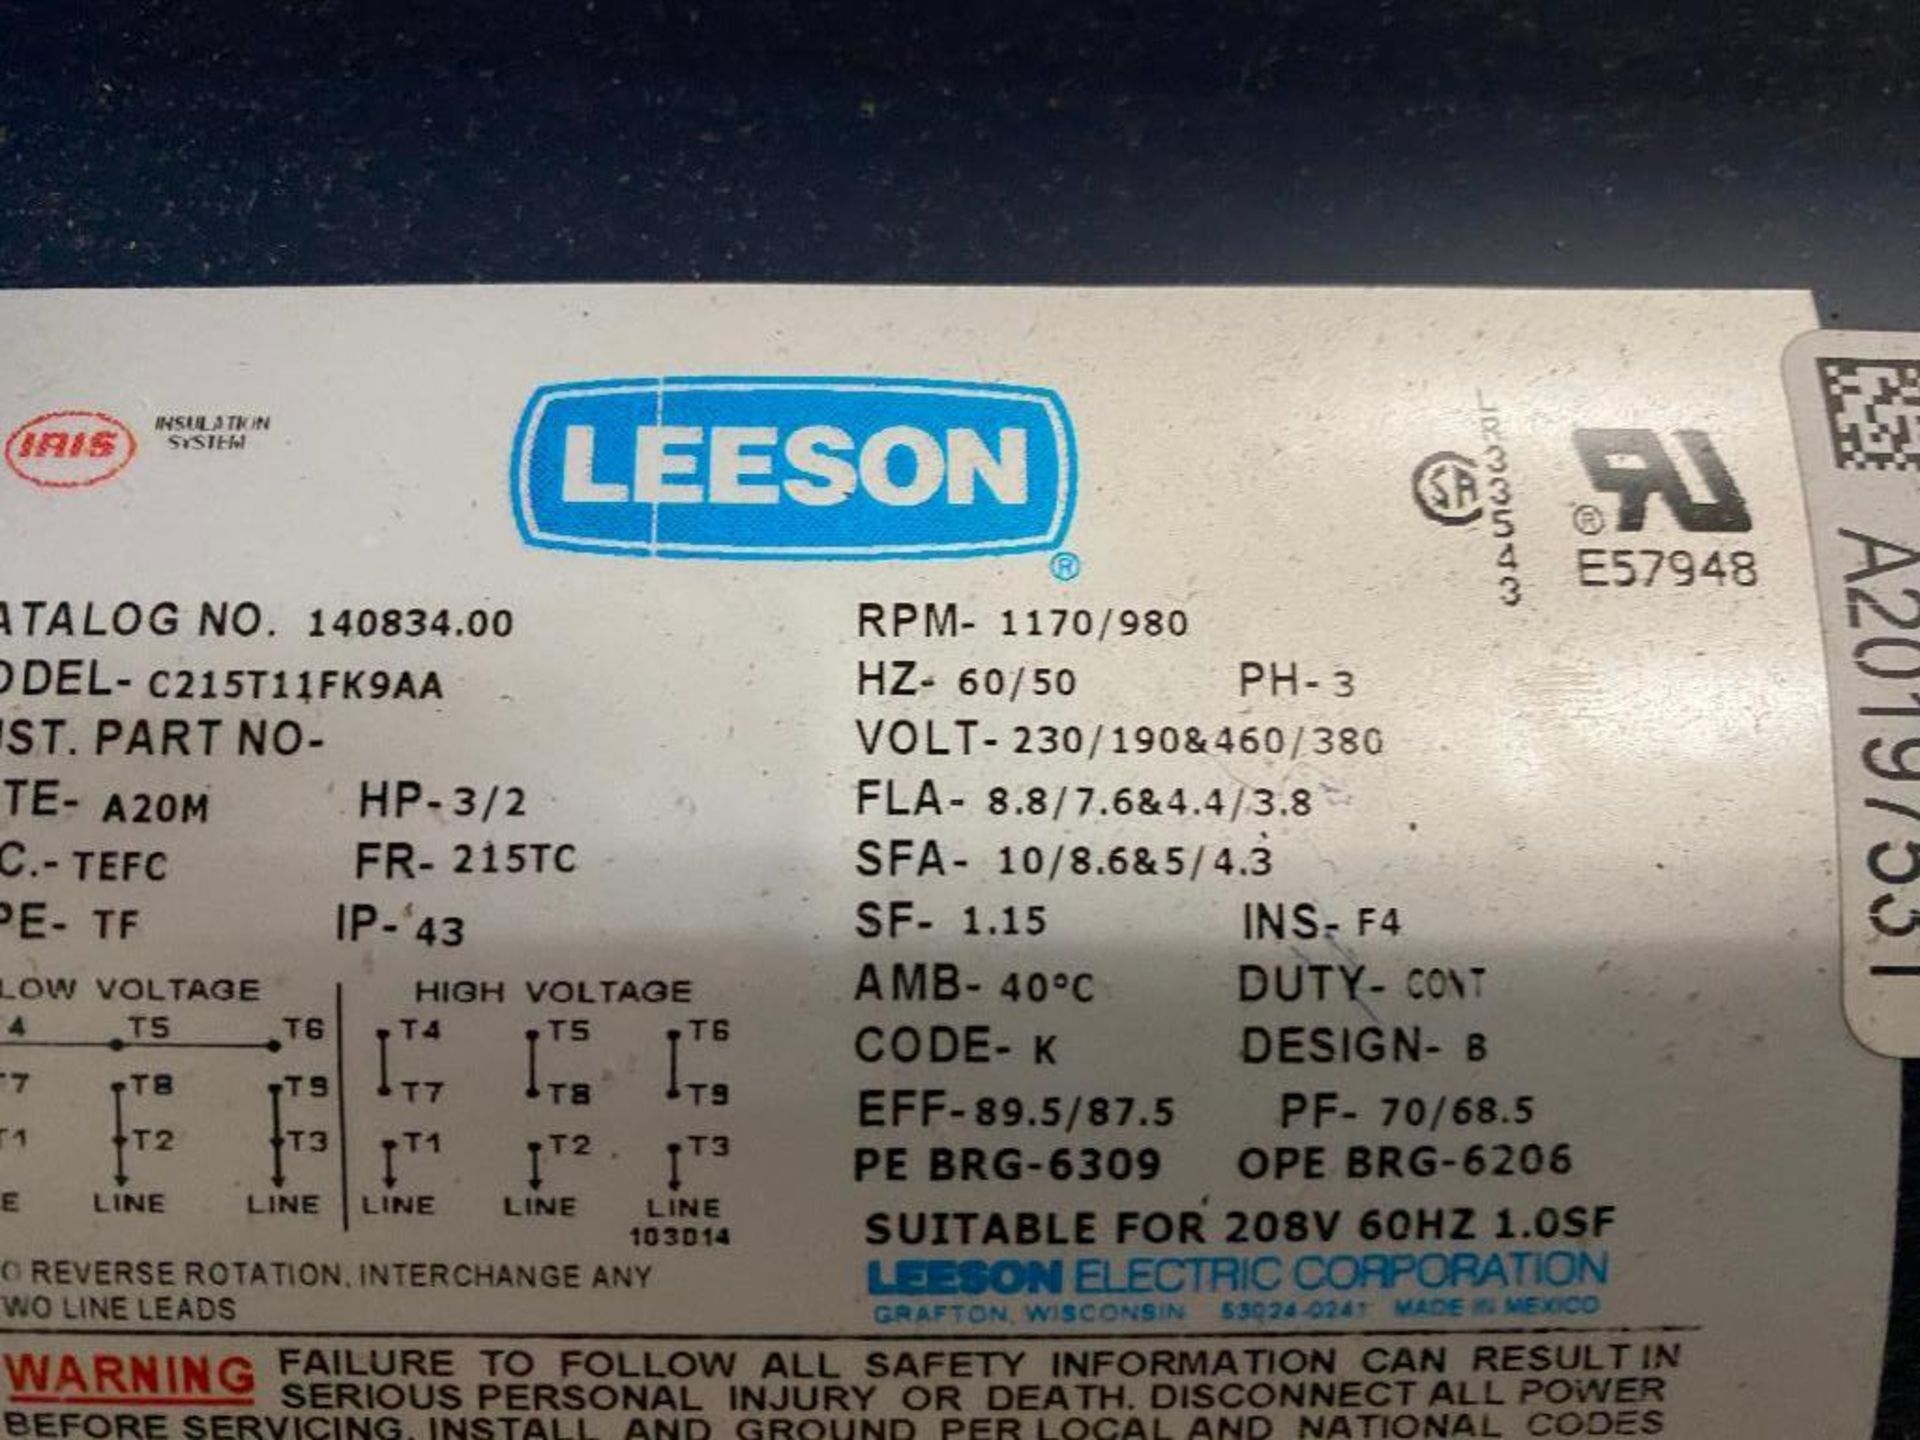 Leeson 3/2 HP Electric Motor, 230/190 & 460-380 V, 60/50 Hz, 3 PH, 1170/980 RPM, 215TC Frame - Image 2 of 2